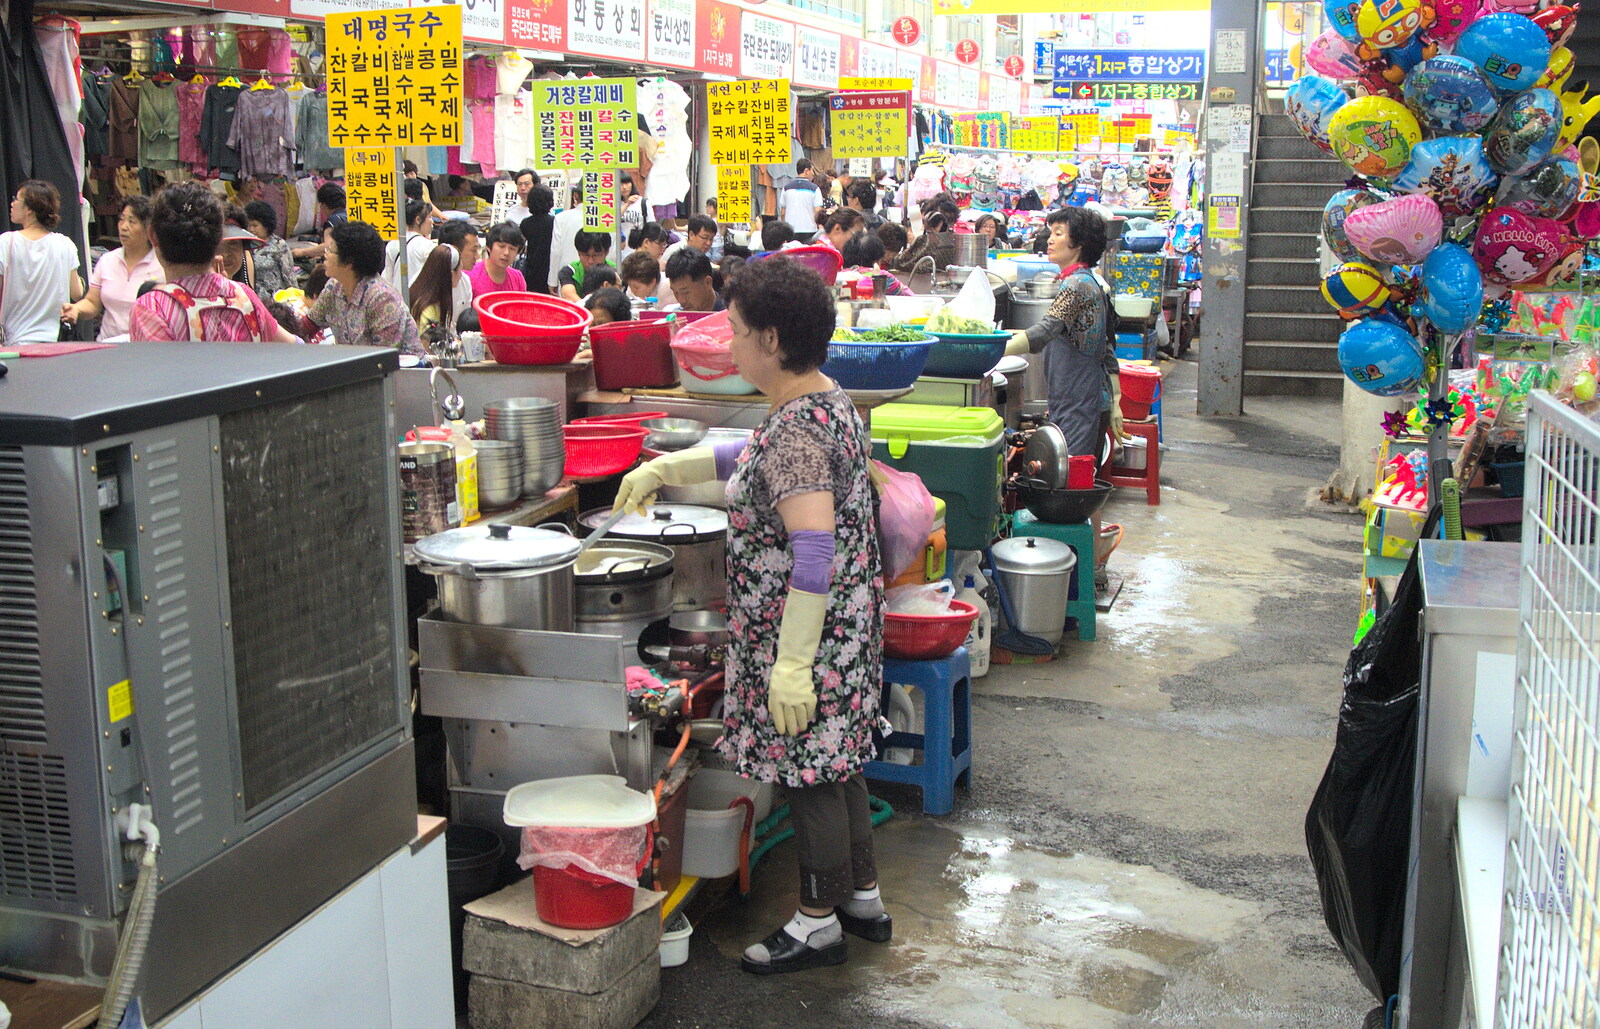 The 'food corridor' from Seomun Market, Daegu, South Korea - 1st July 2012